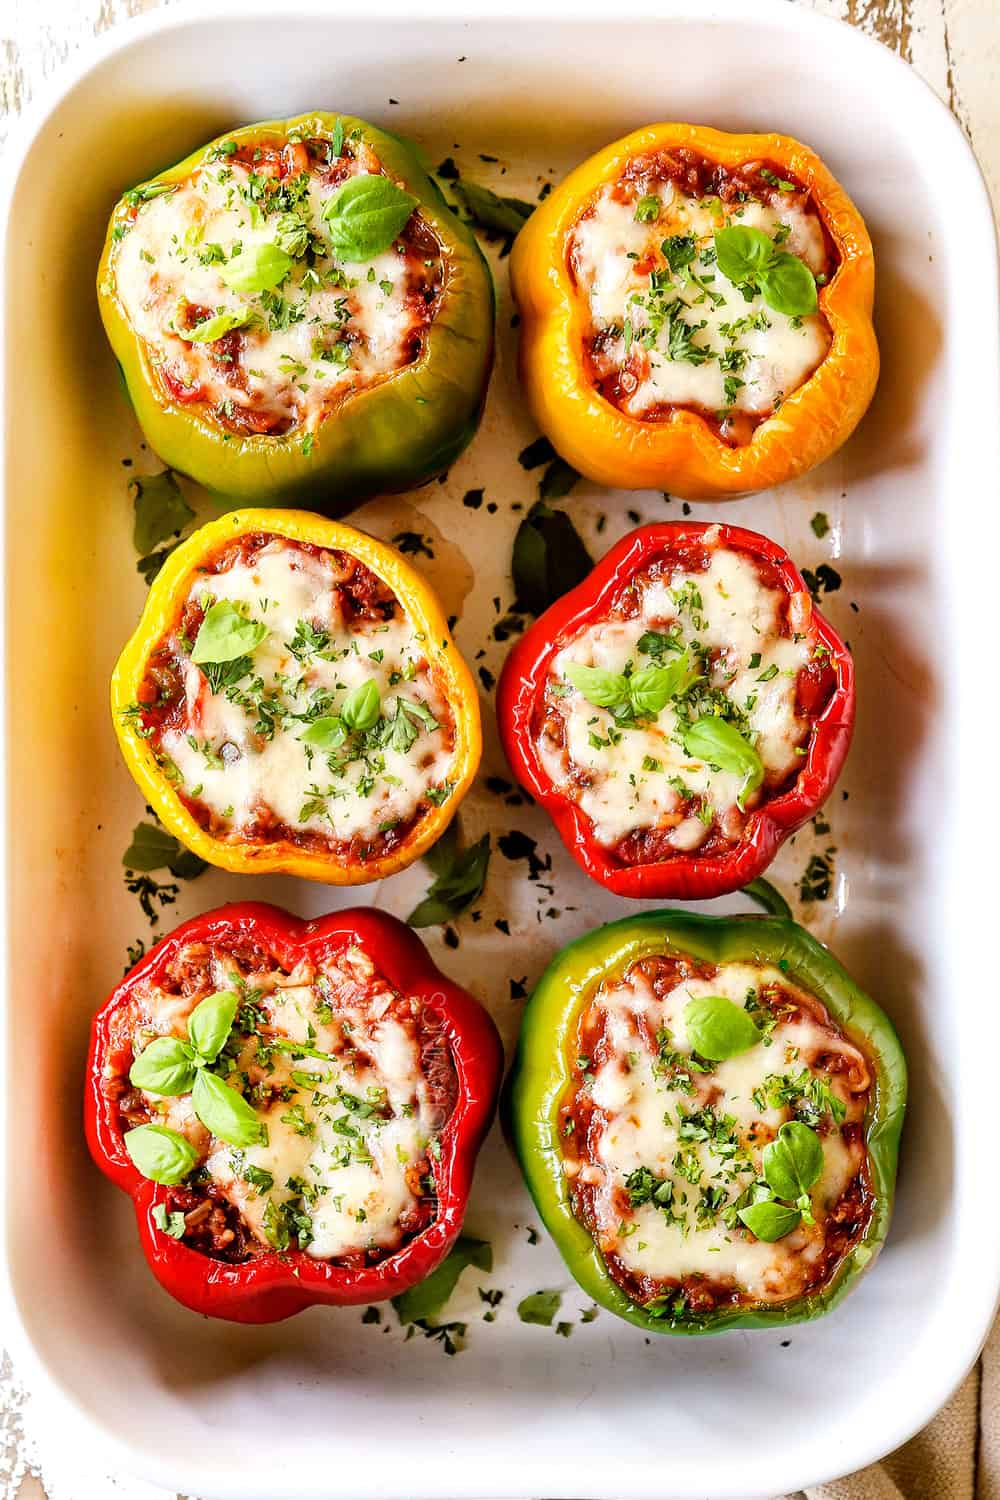 https://carlsbadcravings.com/wp-content/uploads/2021/12/italian-stuffed-peppers-1.jpg